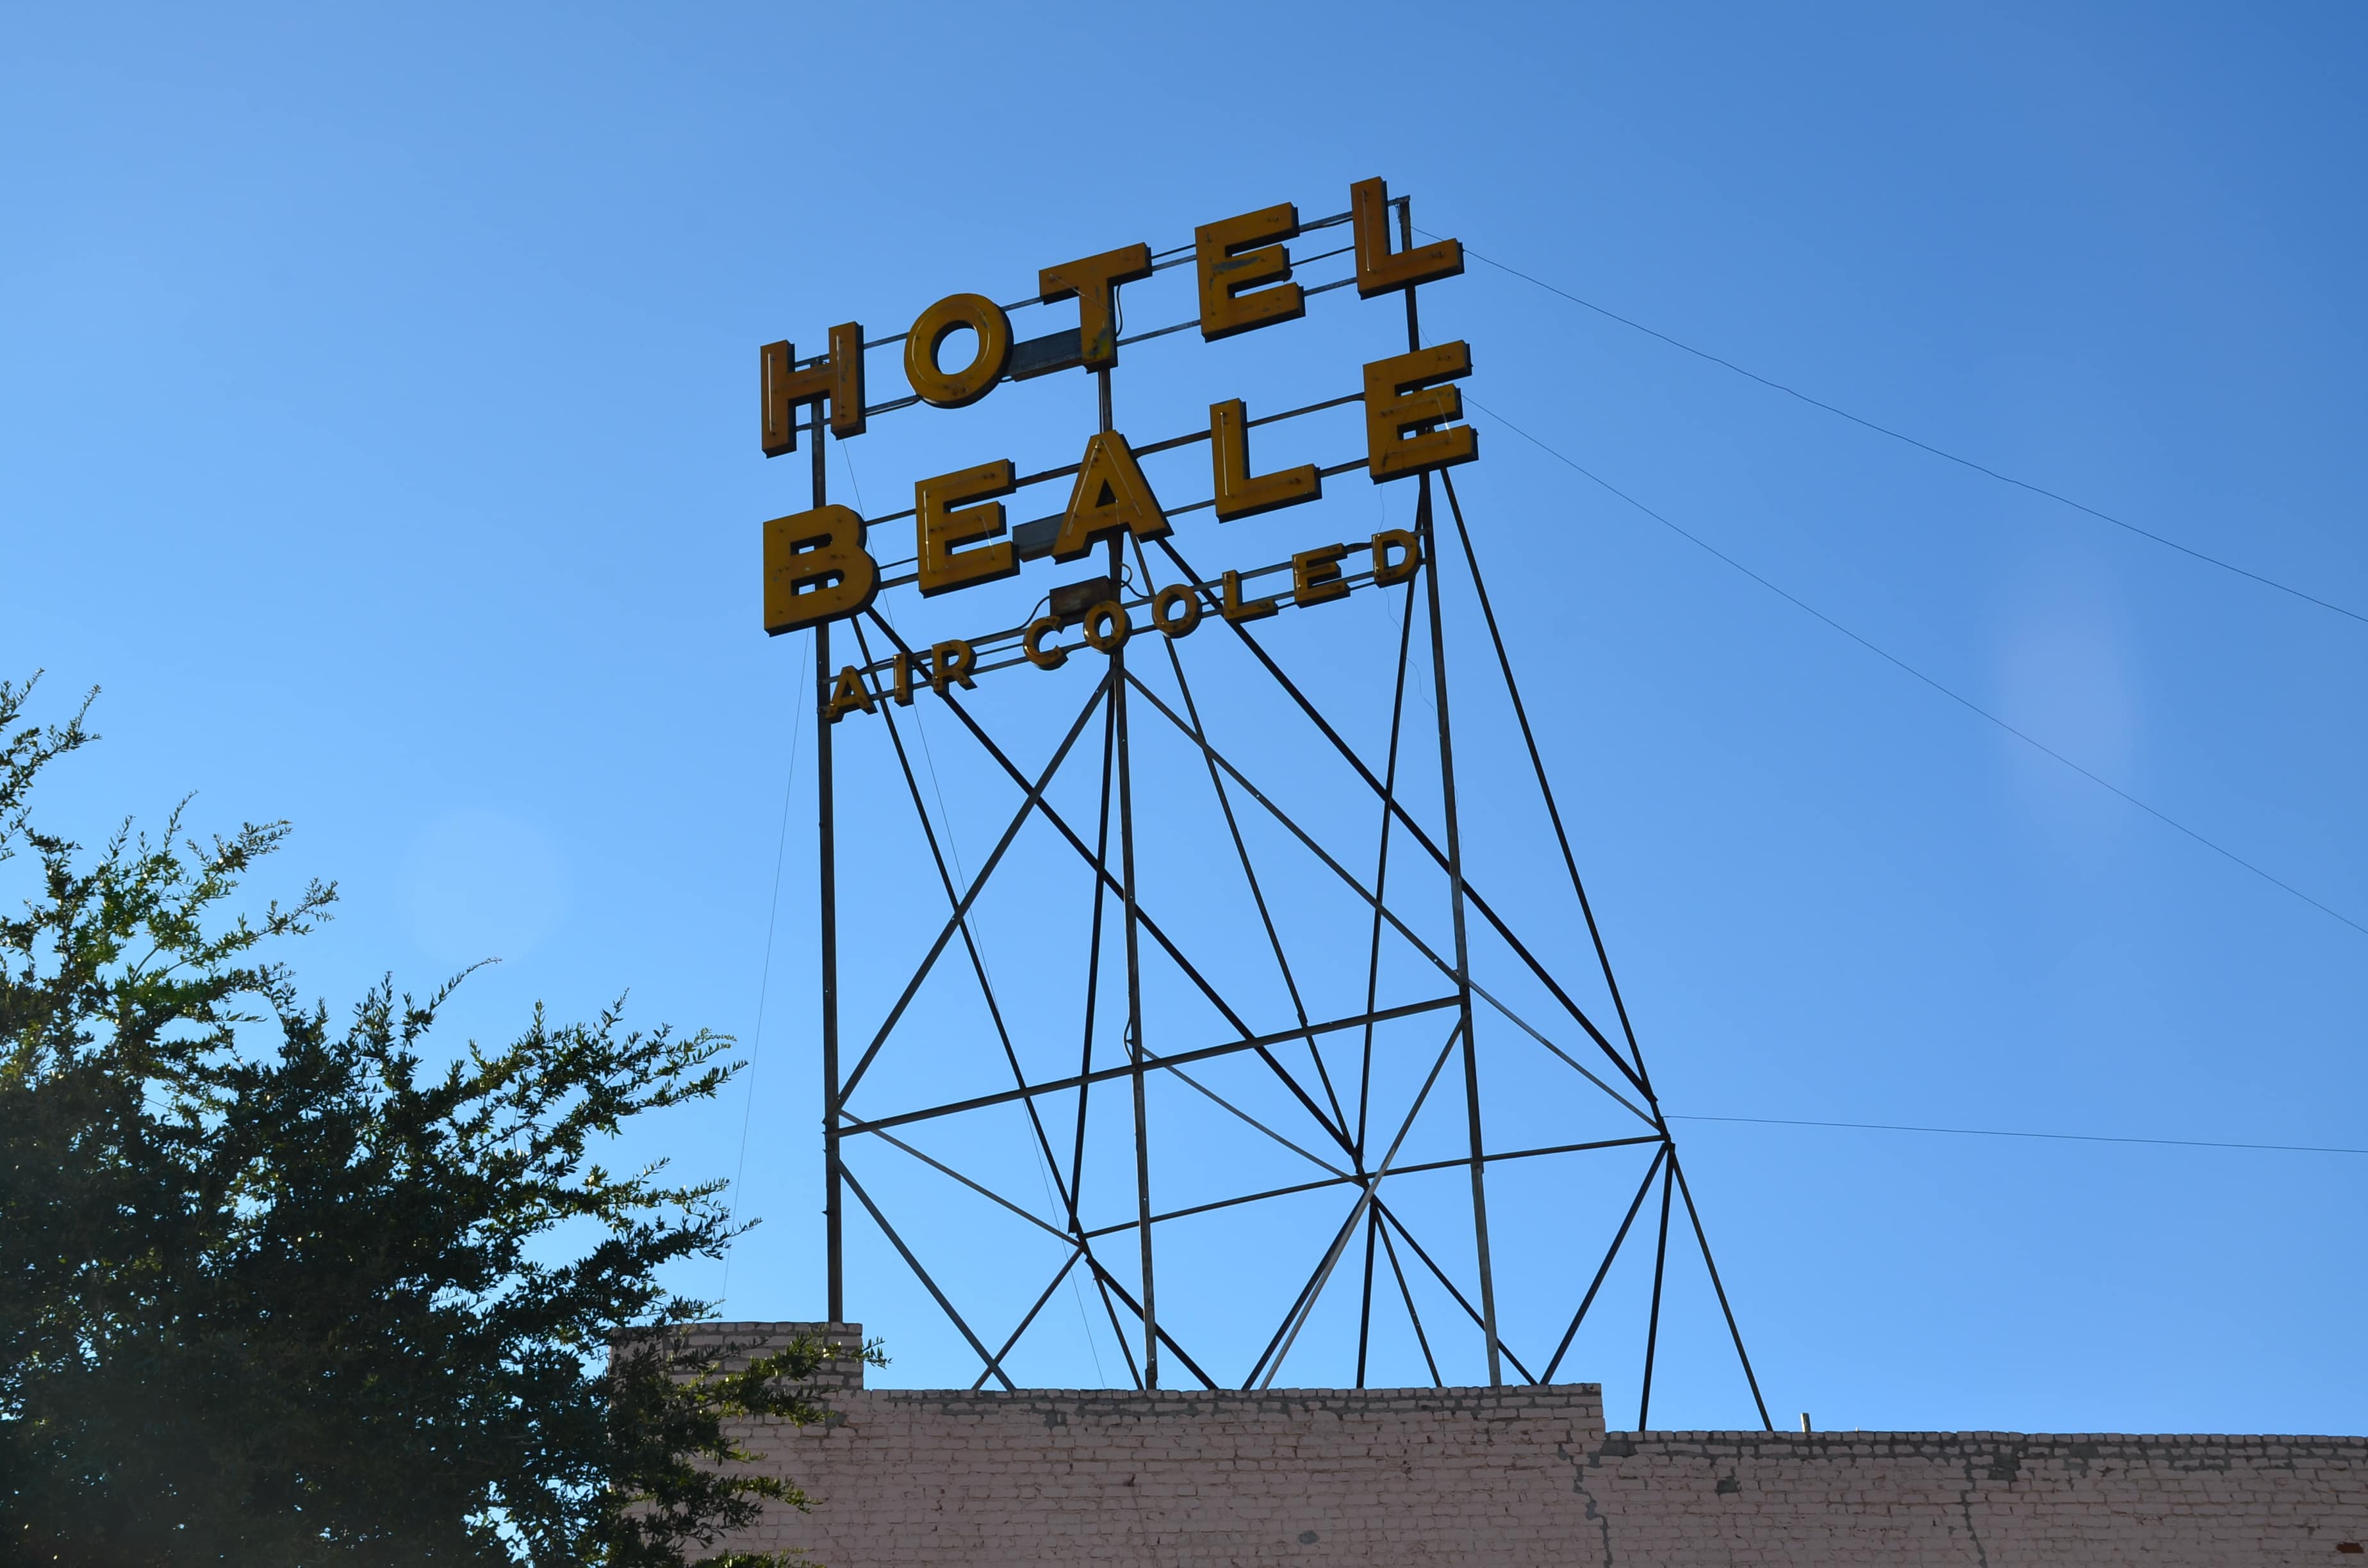 Hotel Beale in Kingman, Arizona